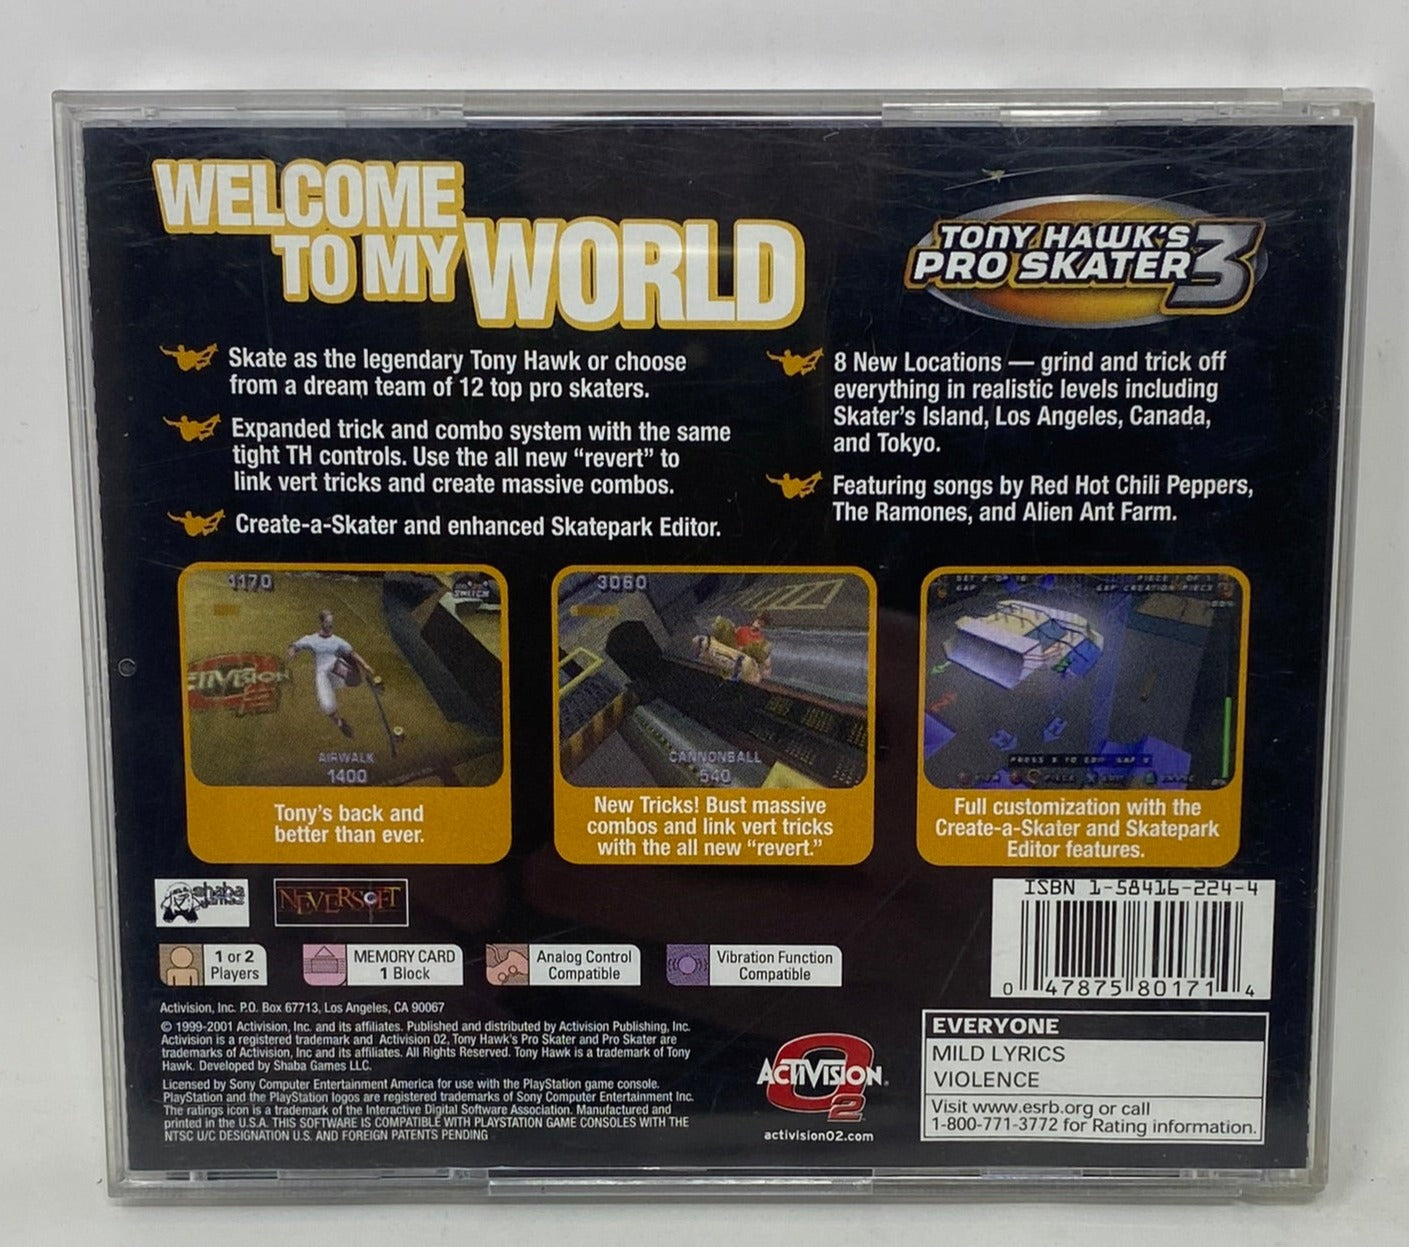 Sony PlayStation - Tony Hawk Pro Skater 3 - Complete